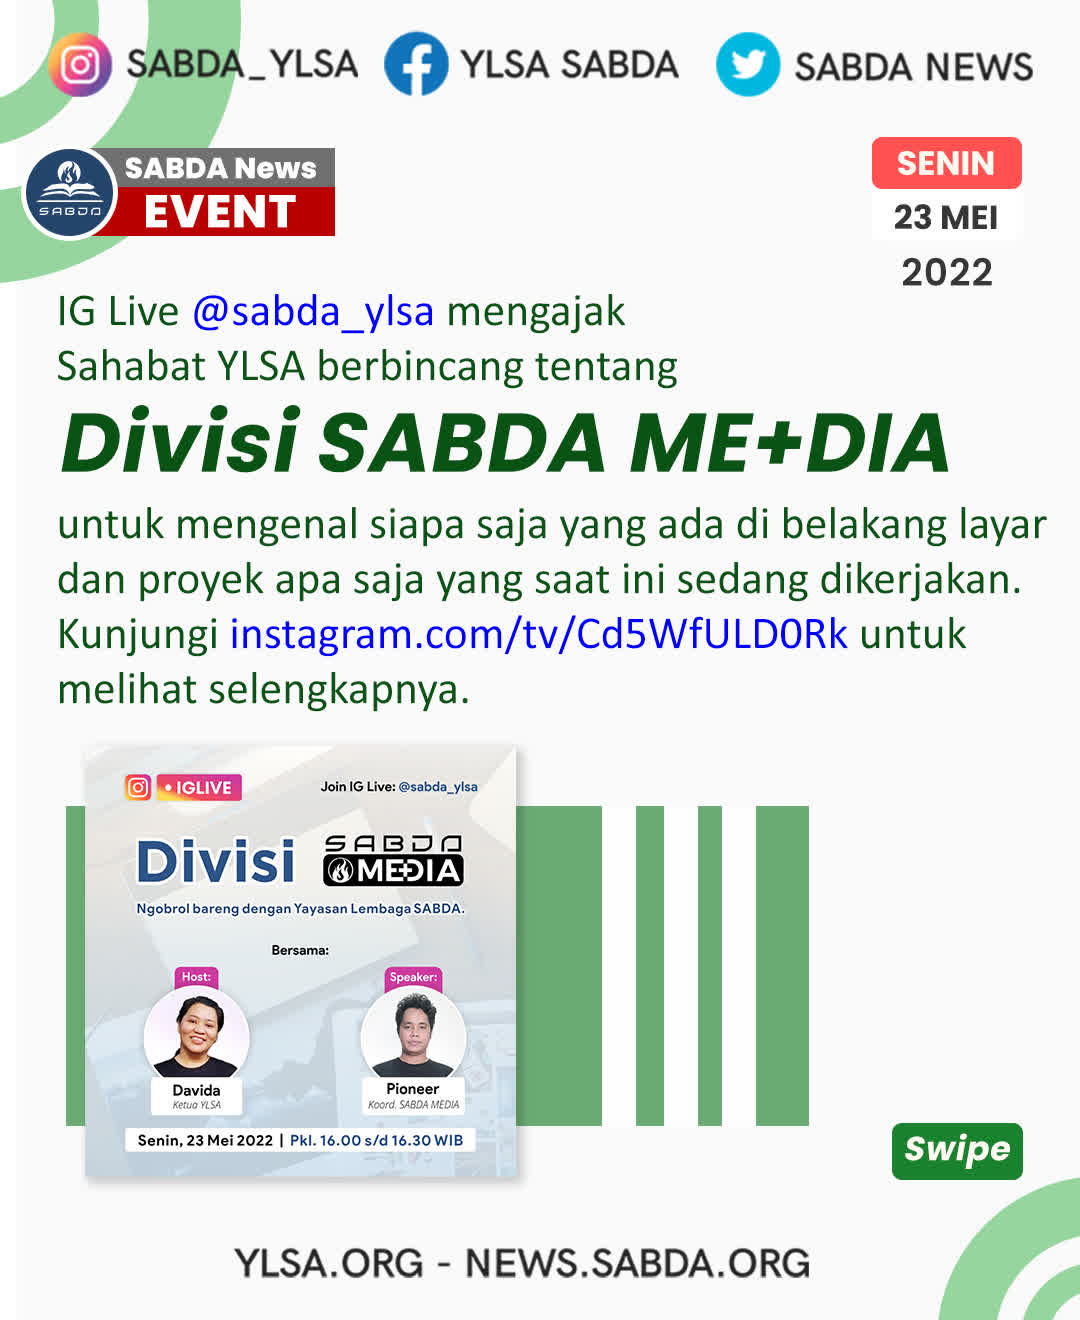 IG Live: Divisi SABDA ME+DIA